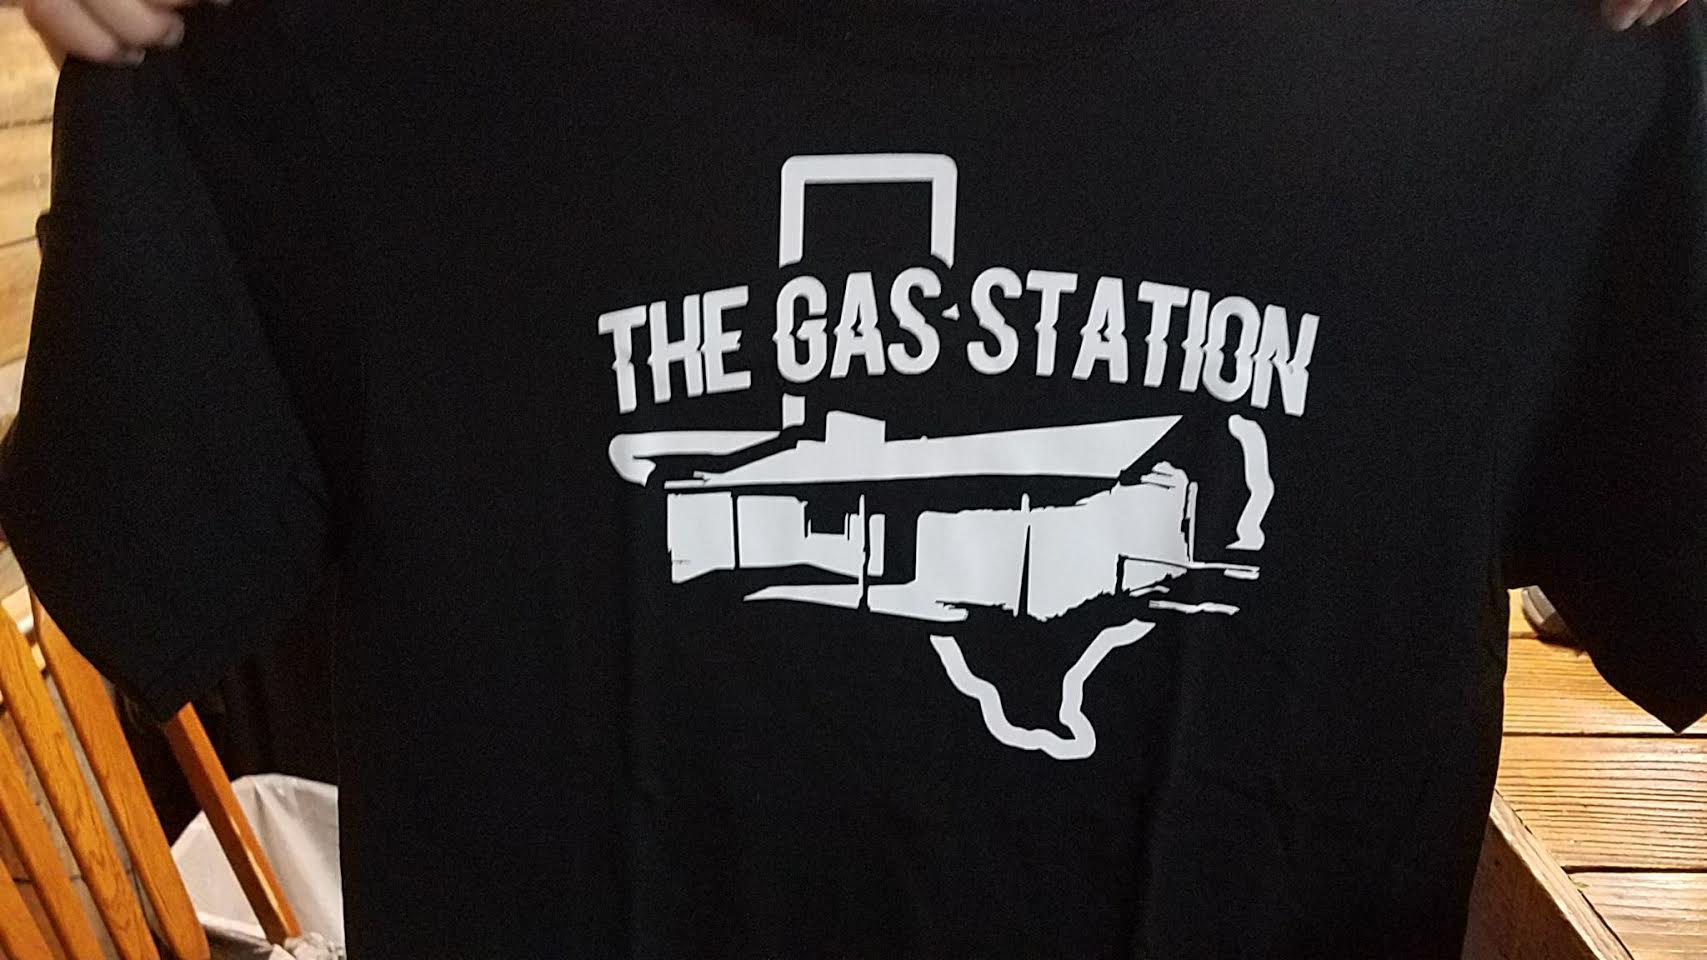 Texas Station Logo - The Gas Station Texas Logo – Texas Gas Station